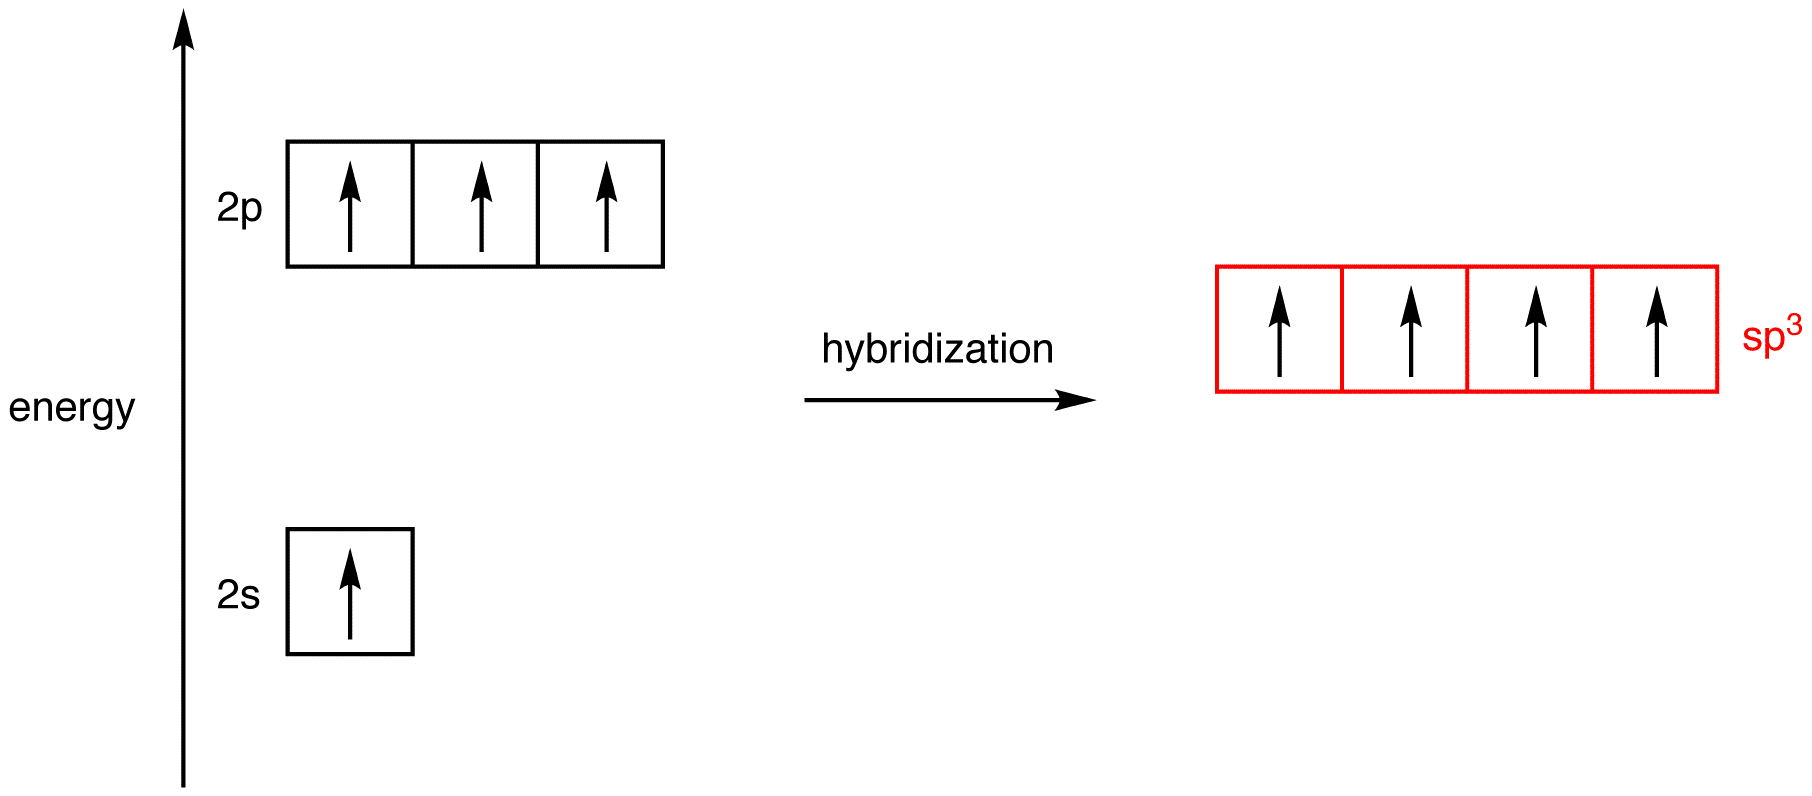 Hybridization | Types and Examples of Hybridization